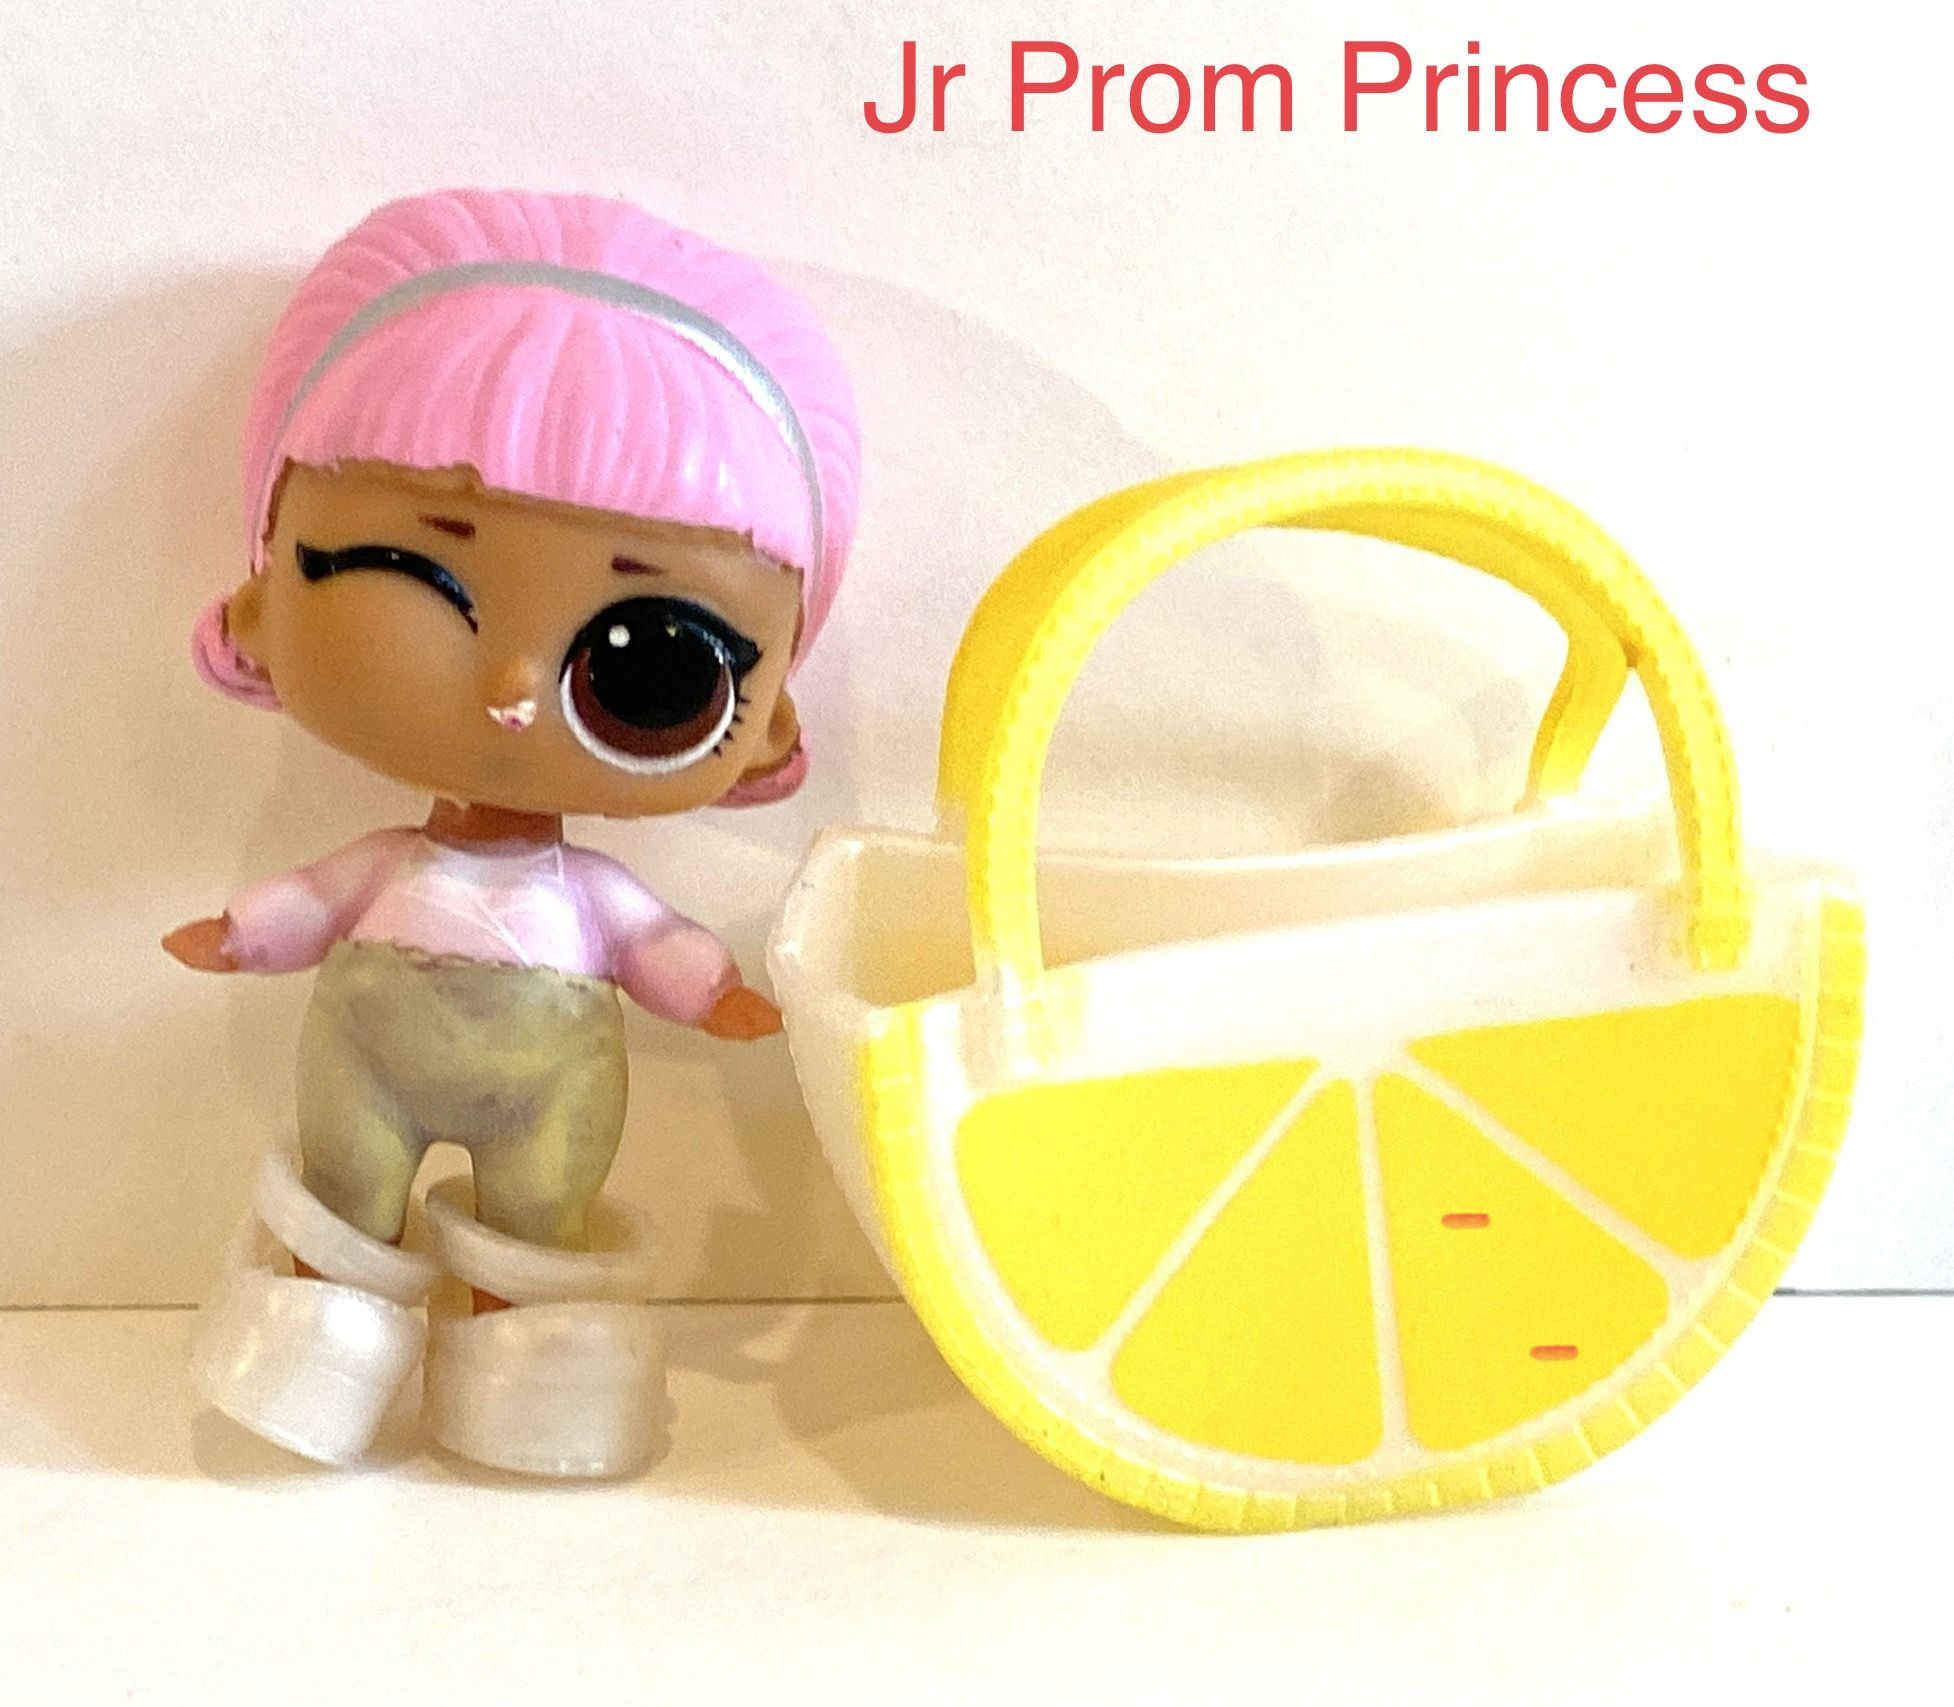 Jr Prom Princess LOL Surprise Doll